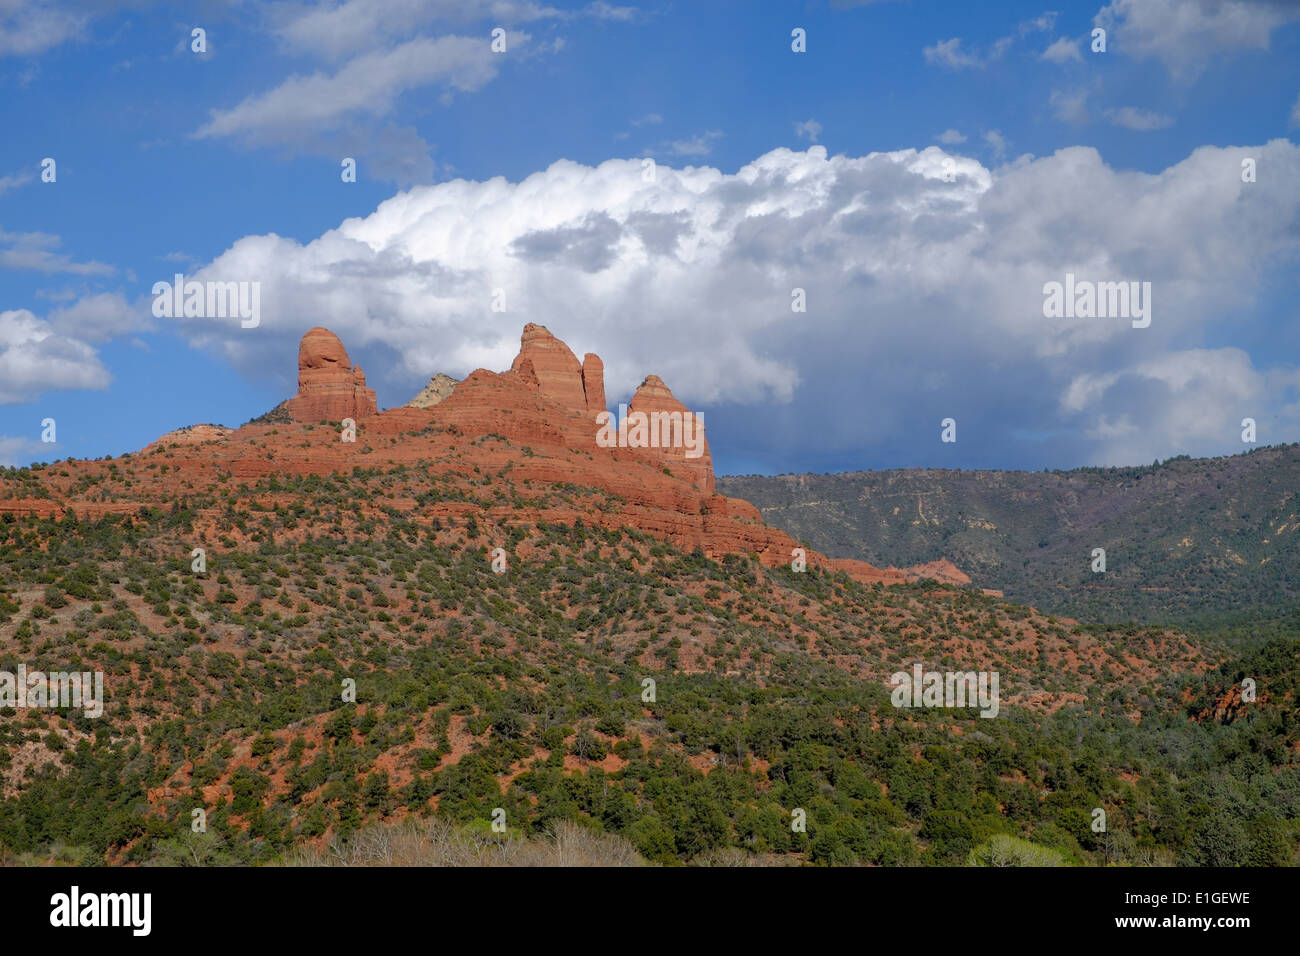 Red sandstone rock formations at Sedona, Arizona, USA. Stock Photo